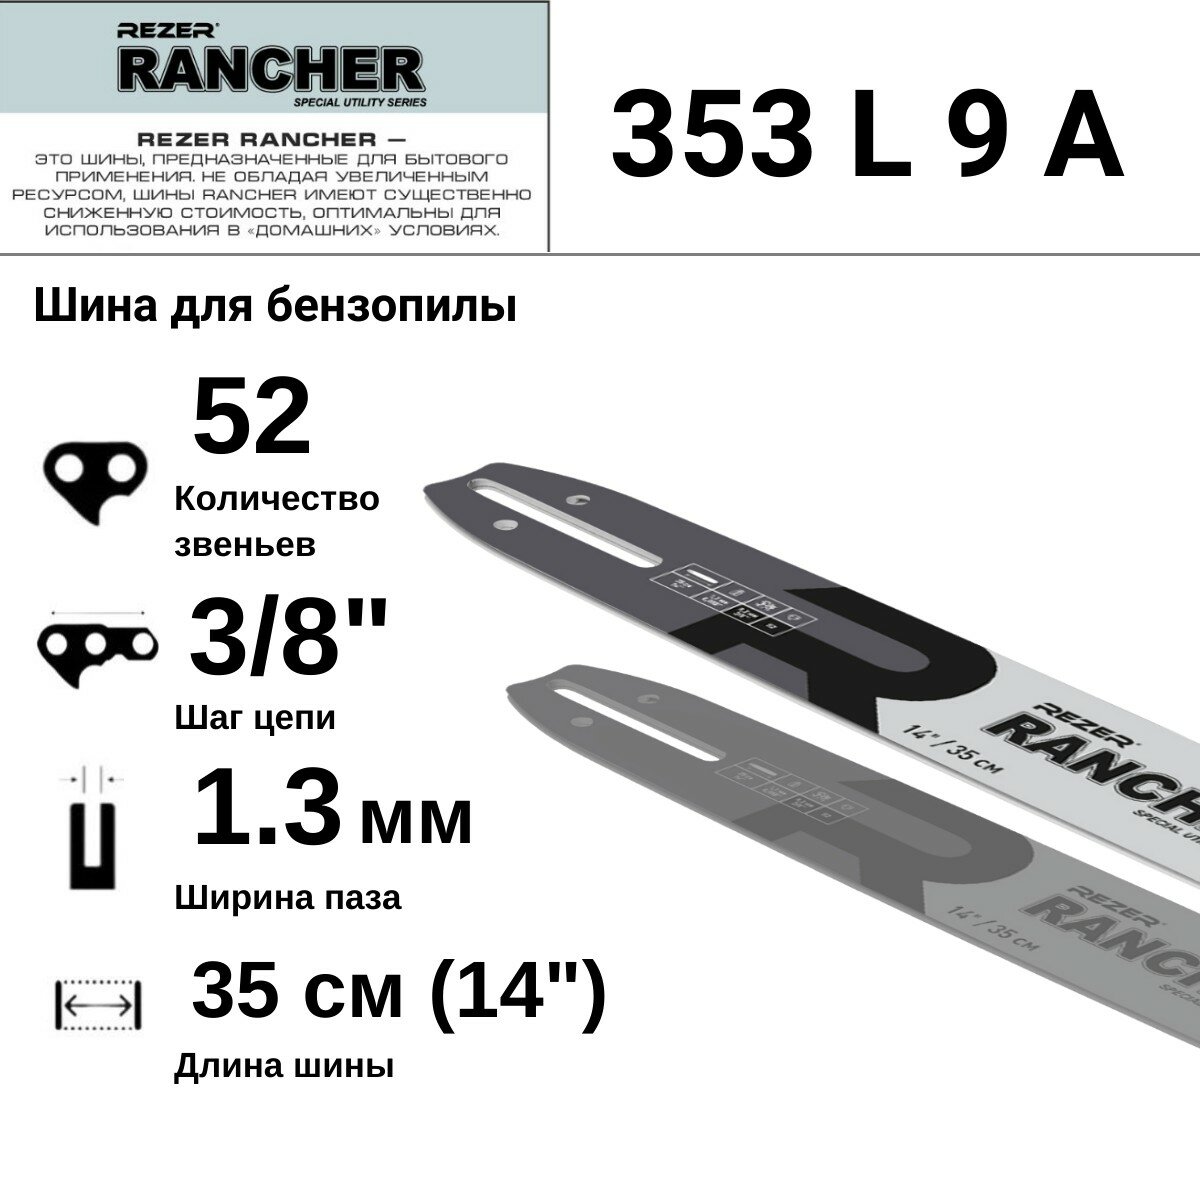 Rezer RANCHER 353 L 9 A Шина для бензопилы Husqvarna 236/240, Partner, Poulan, Makita, 52 звена, длина шины 14"( 35 см) , шаг 3/8", ширина паза 1.3 мм